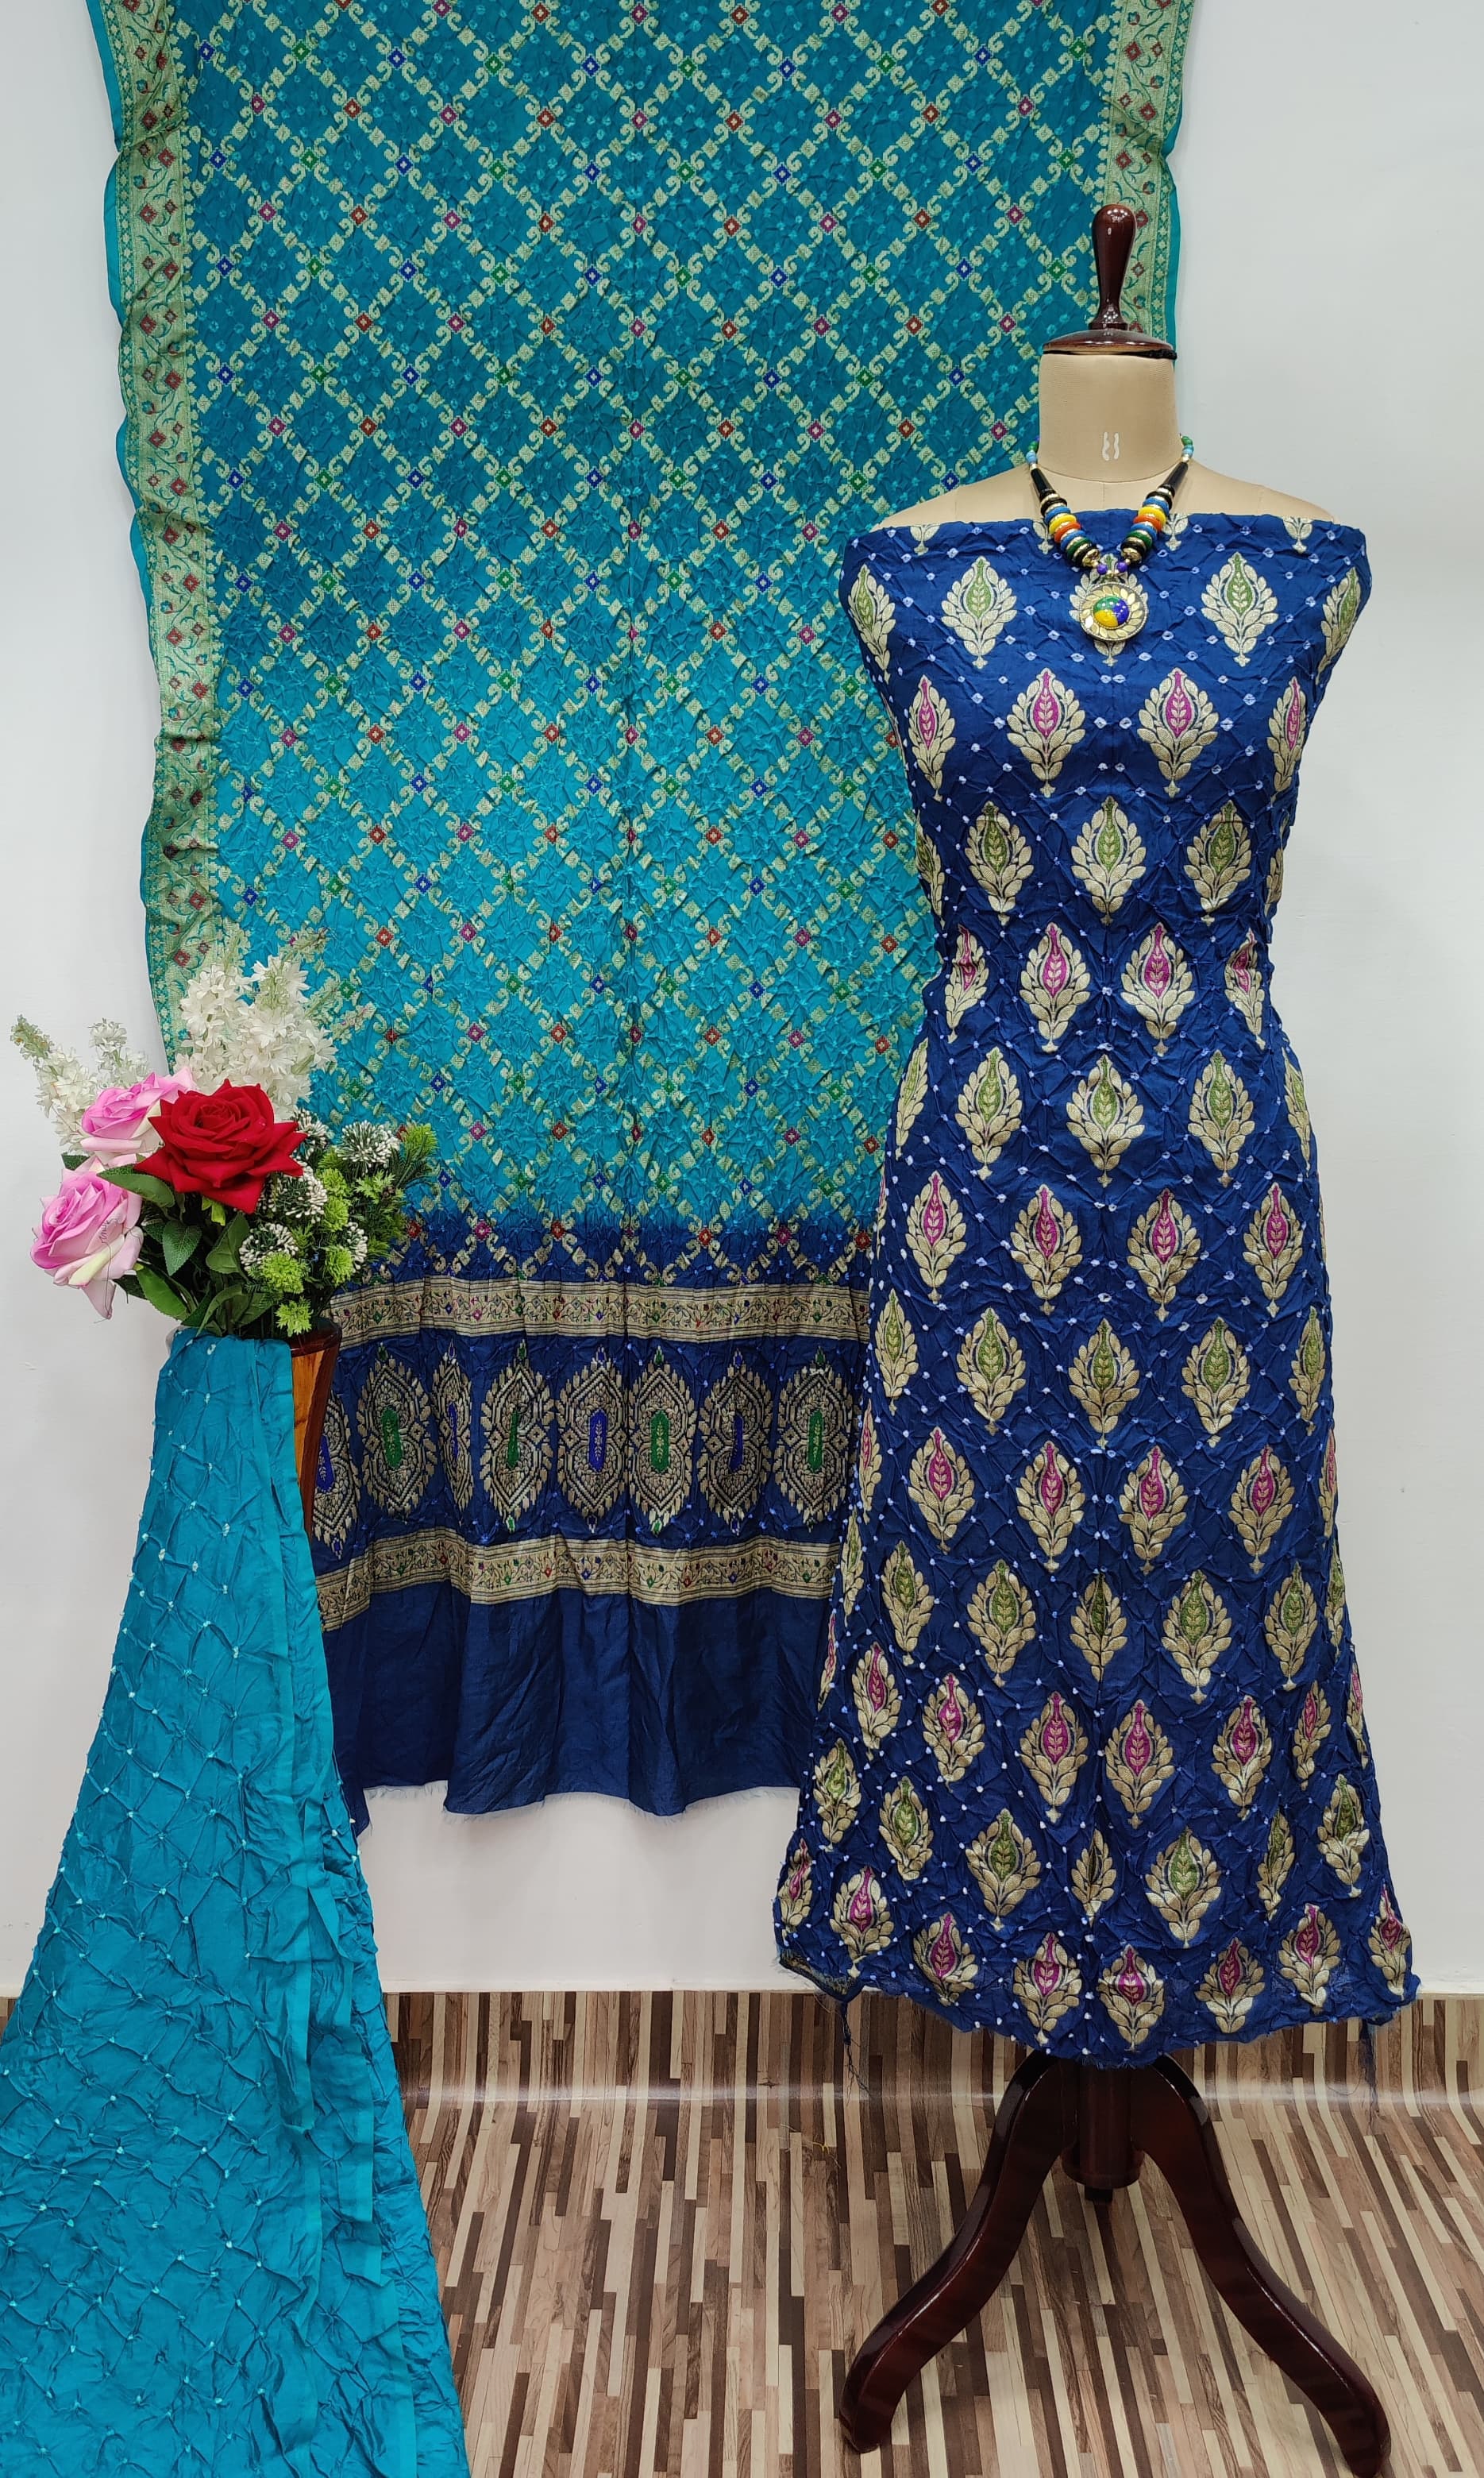 Dhupiyan Silk Authentic Hande made Jamanagar kasab work Bandhani dress material - Premium  from Ethenika.com  - Just INR 4990! Shop now at Ethenika.com 